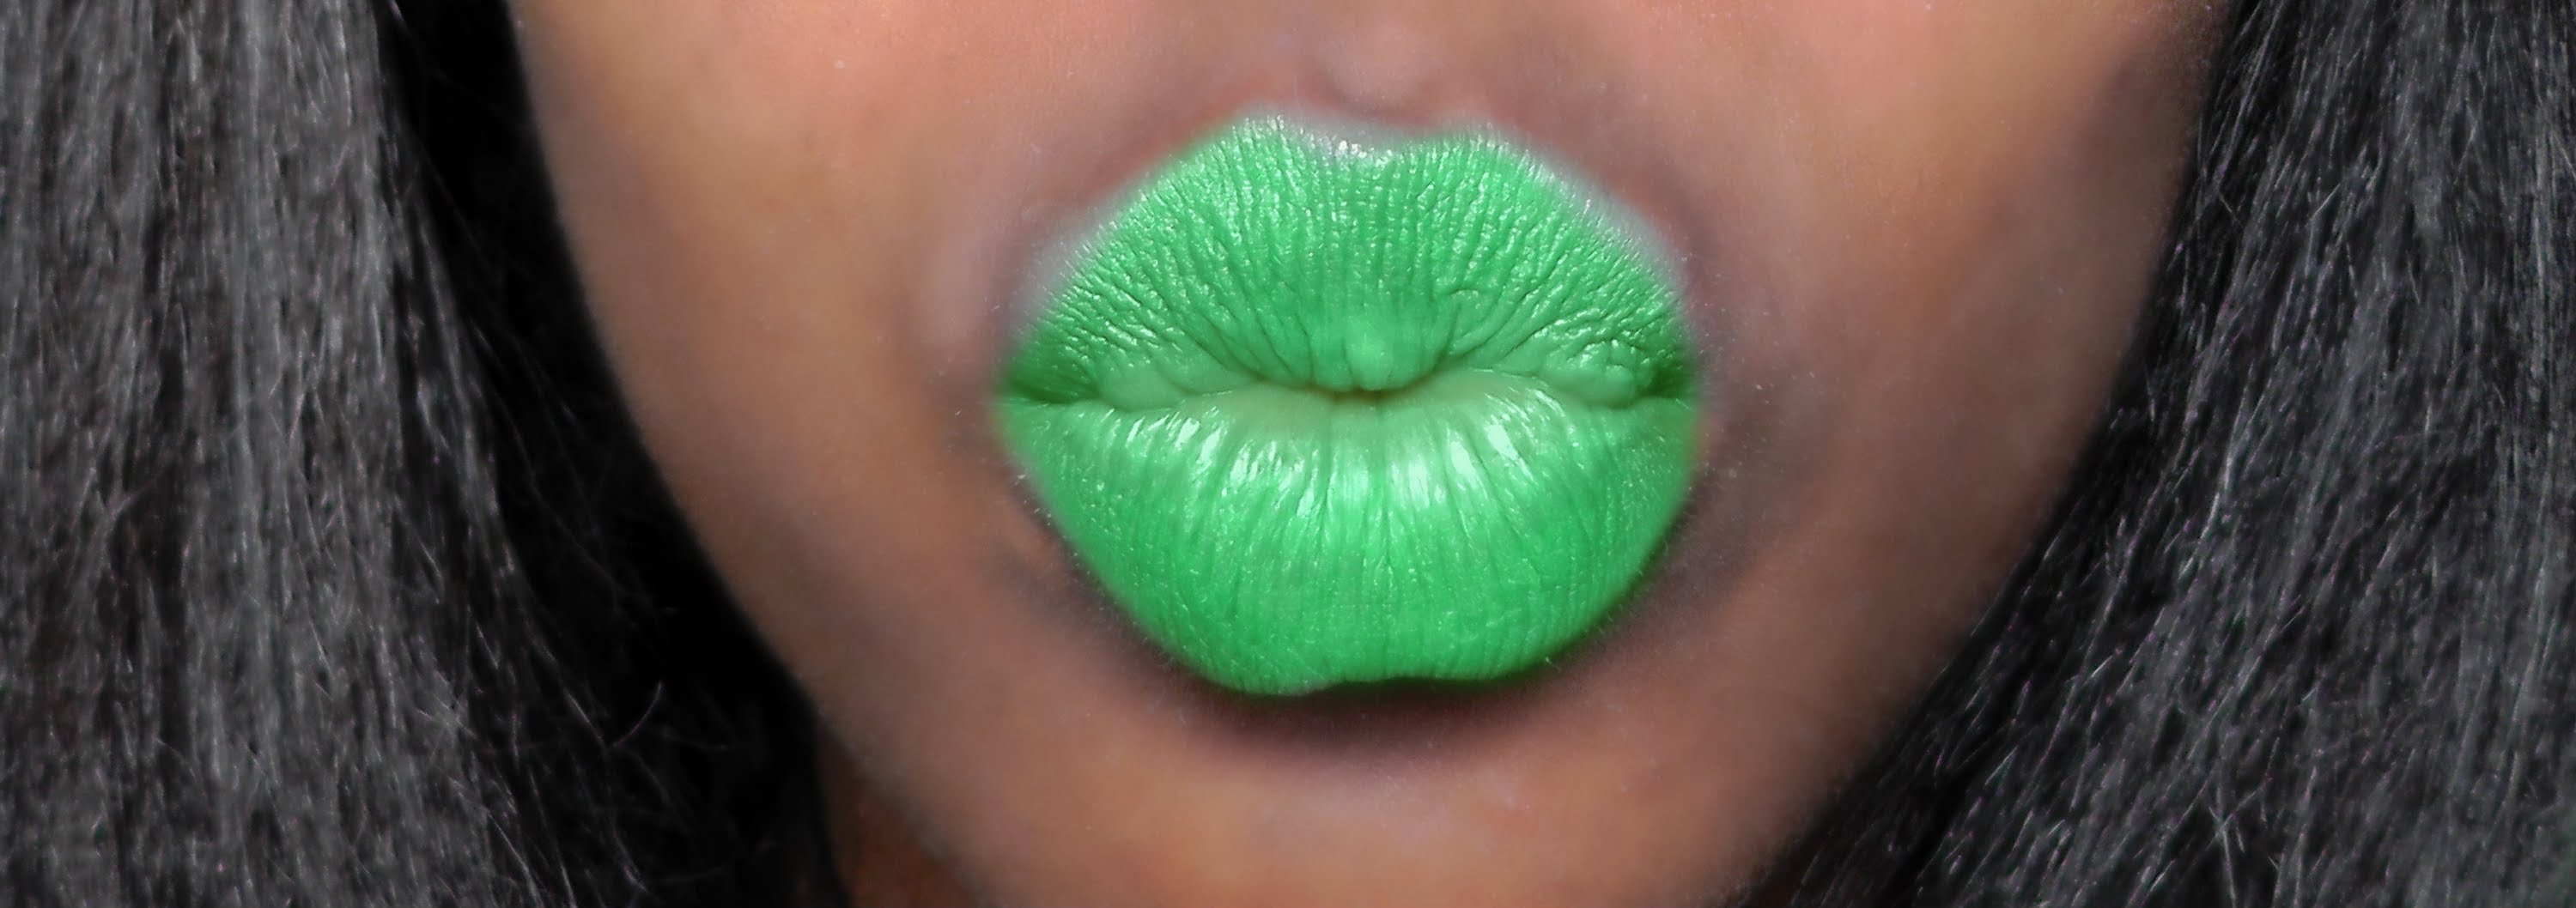 DIY: How to Make Green Lipstick - YouTube